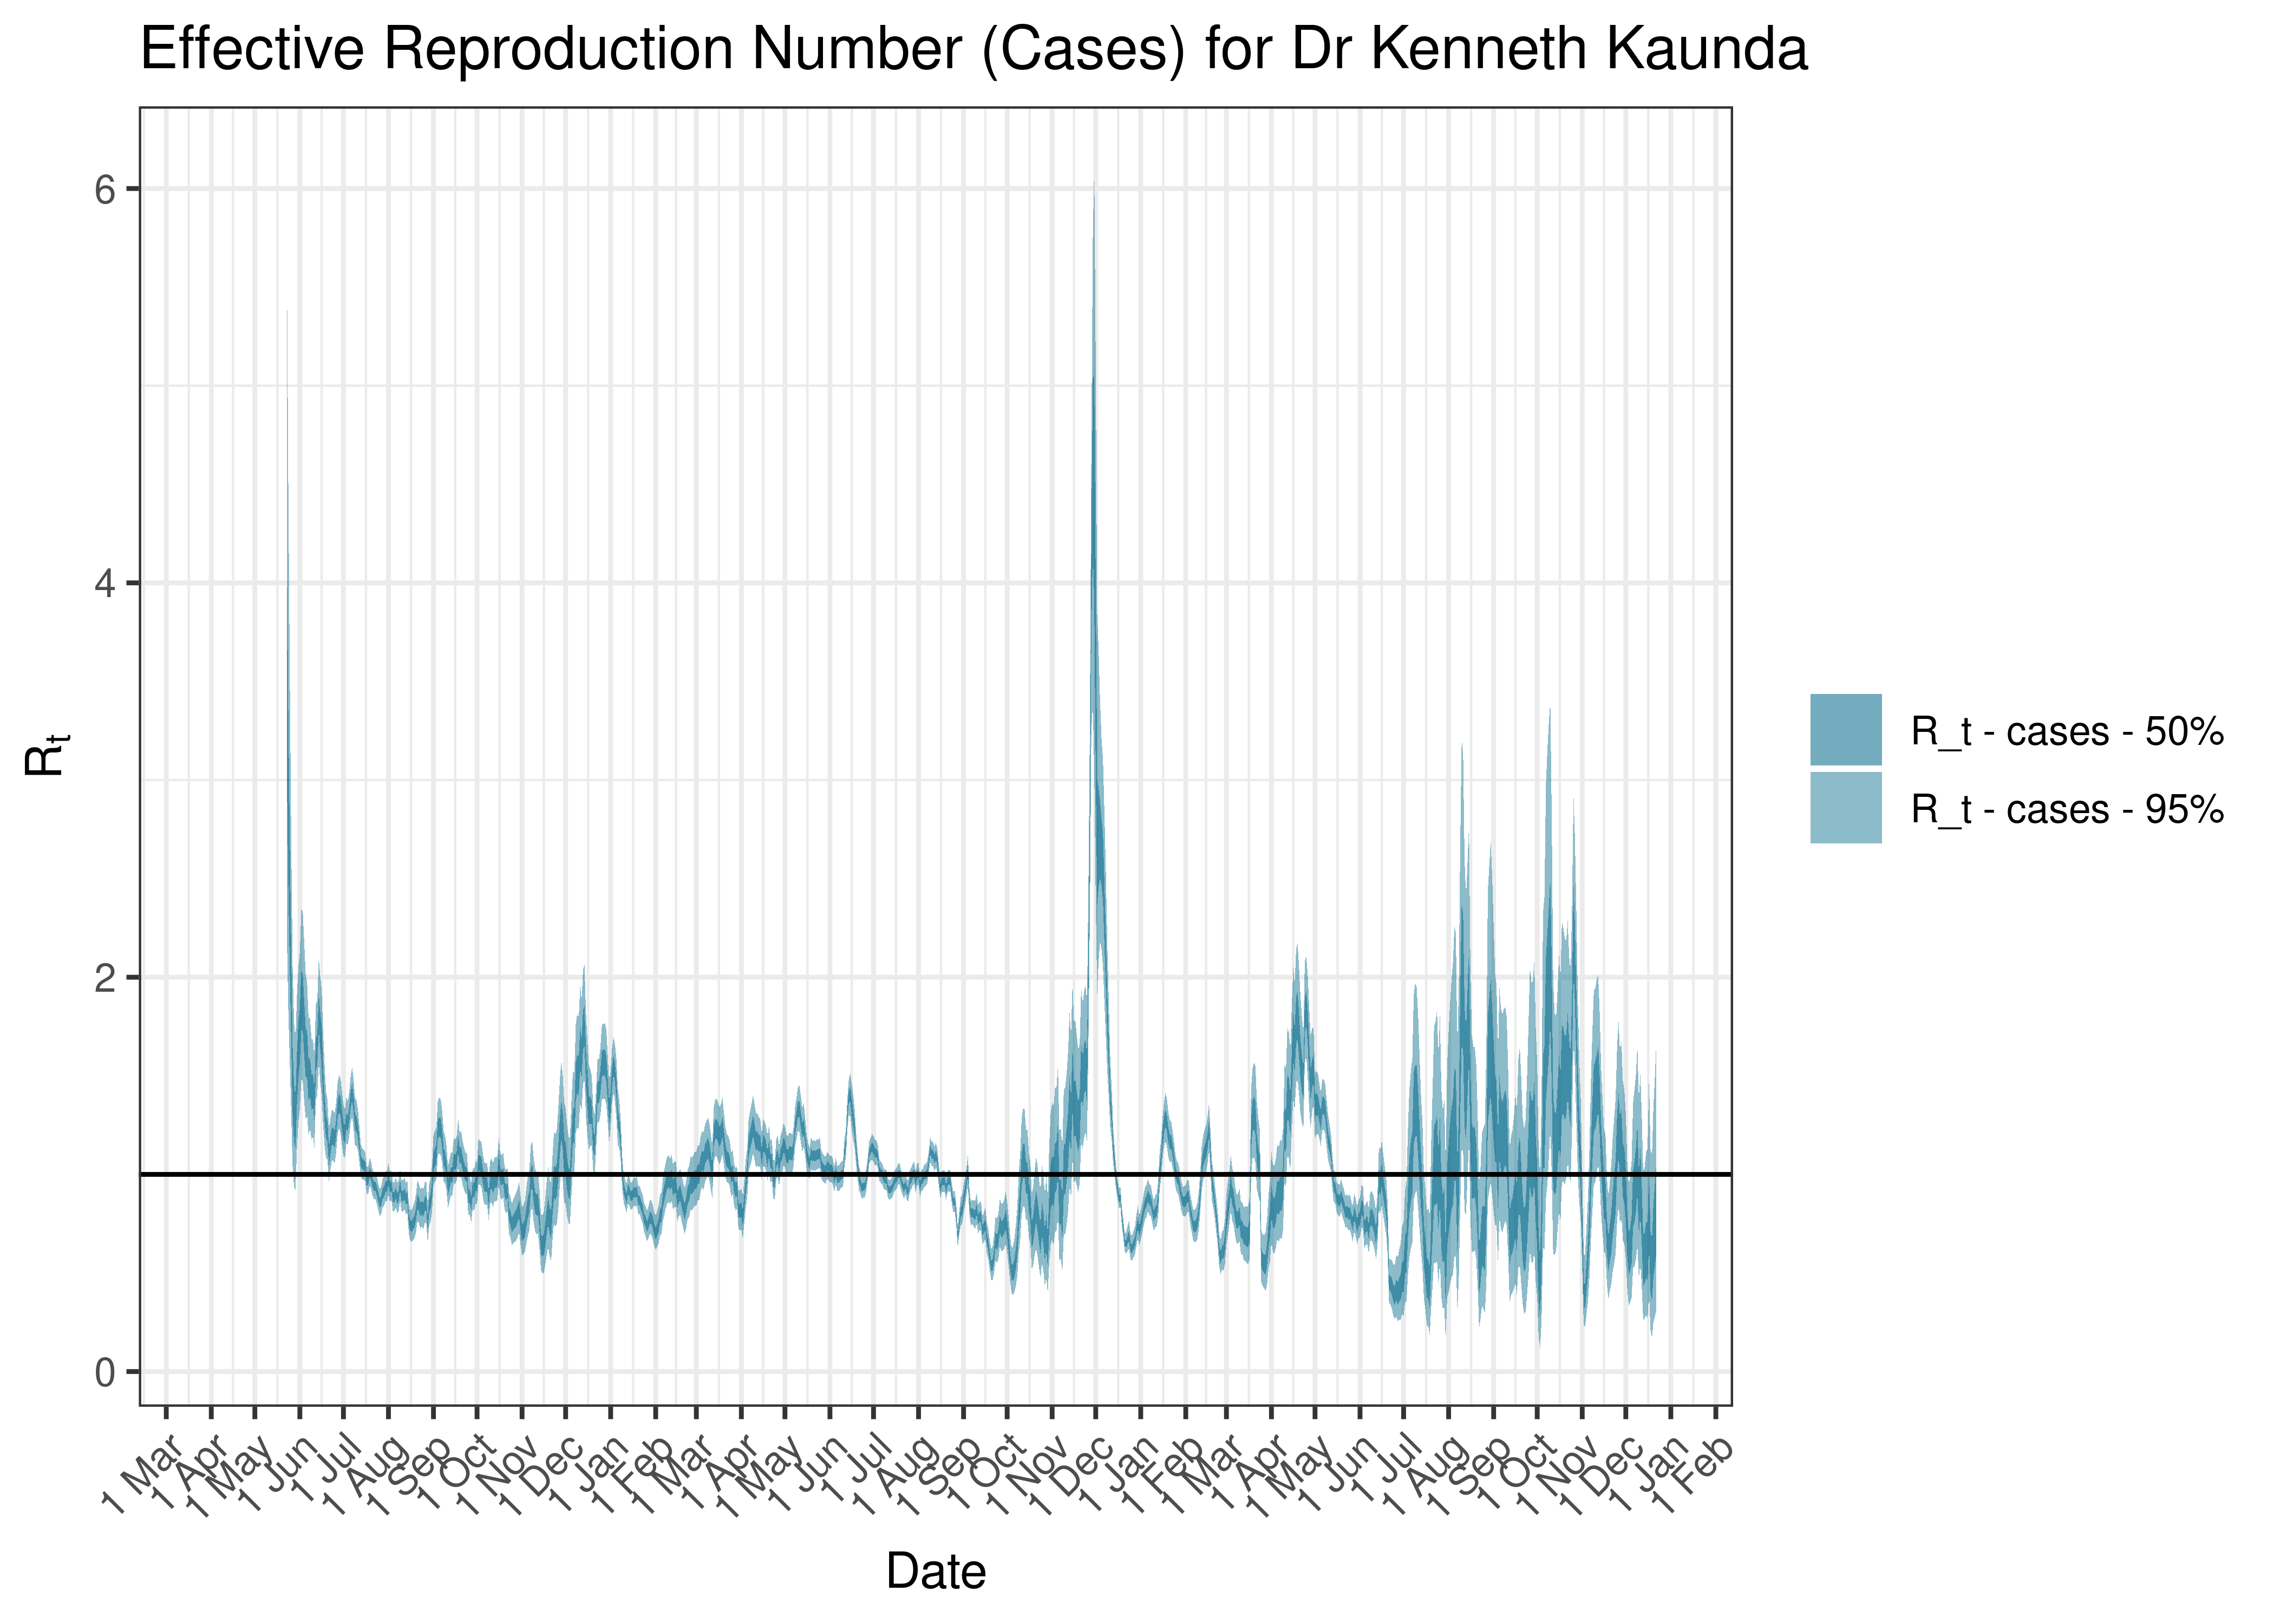 Estimated Effective Reproduction Number Based on Cases for Dr Kenneth Kaunda since 1 April 2020